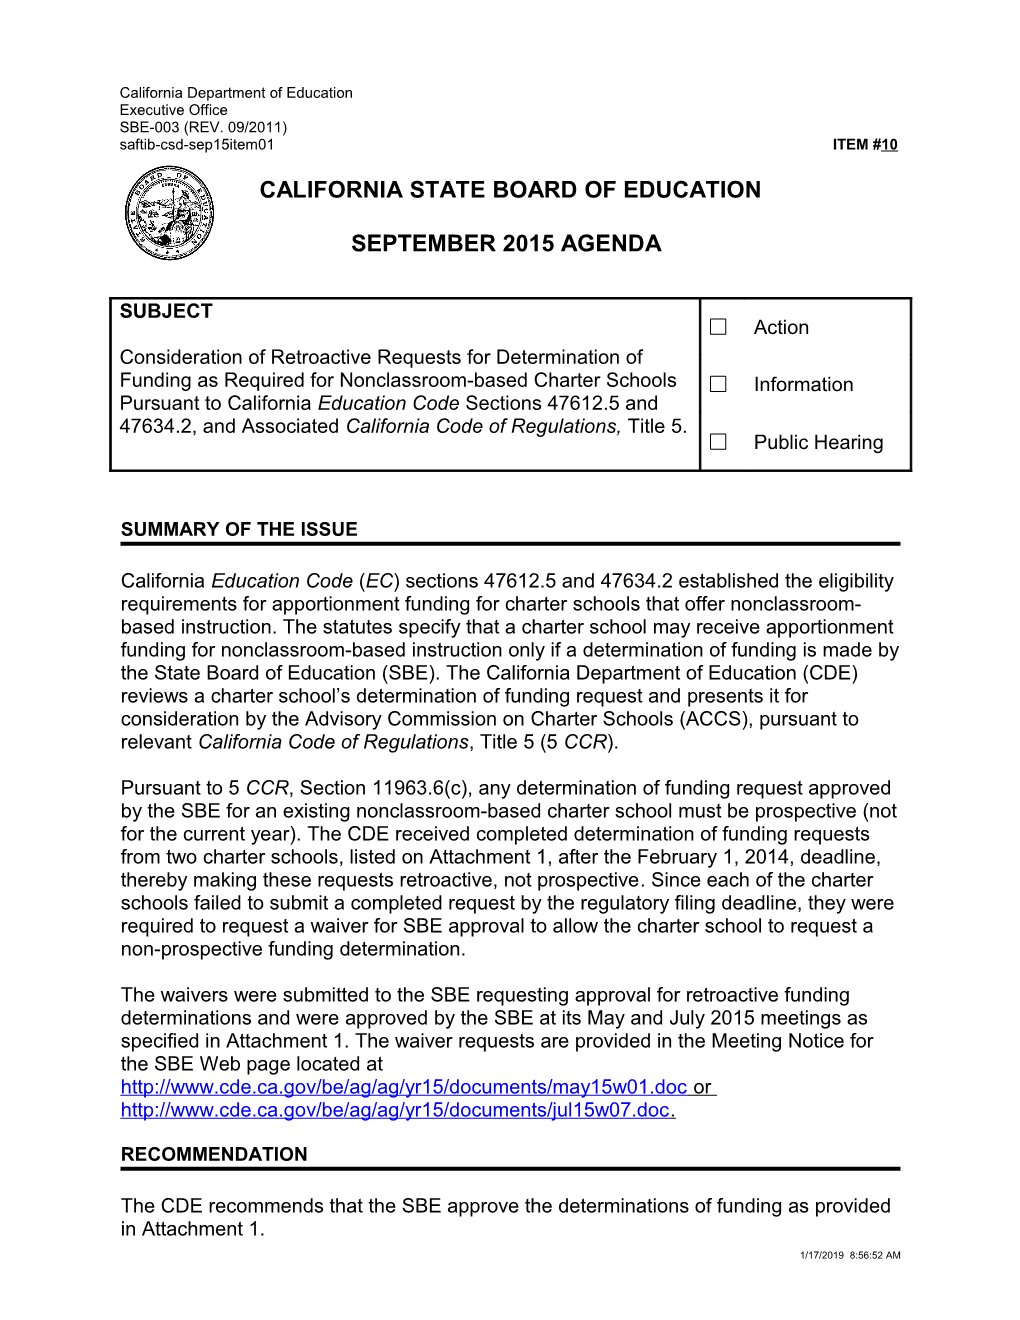 September 2015 Agenda Item 10 - Meeting Agendas (CA State Board of Education)